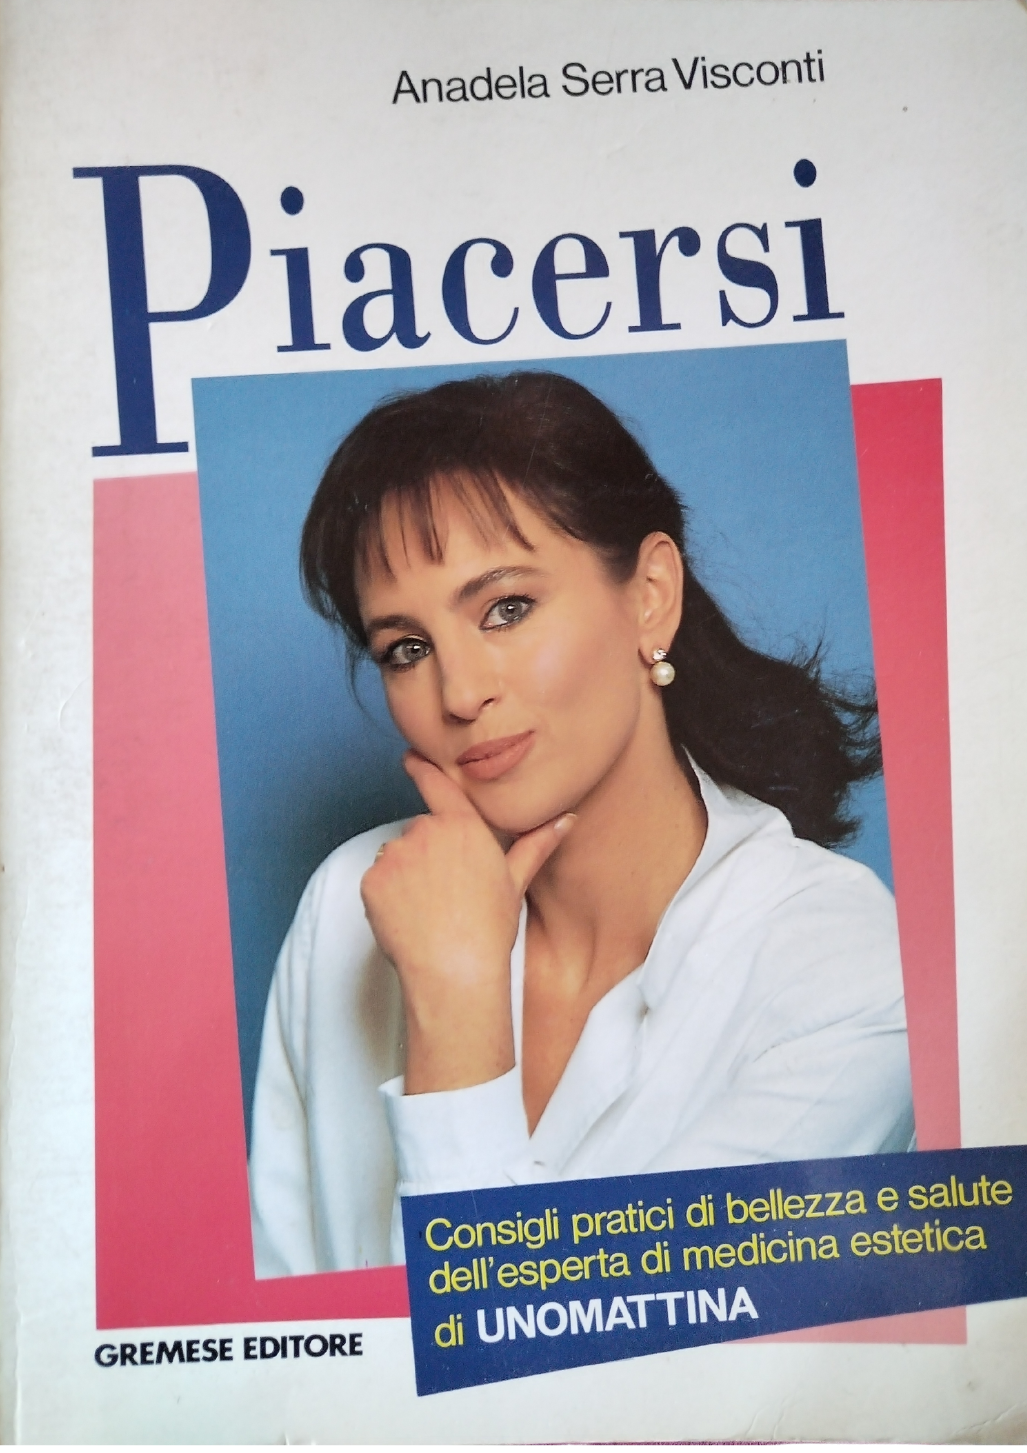 Piacersi, 1996. DI Anadela Serra Visconti. 1996, Gremese Editore